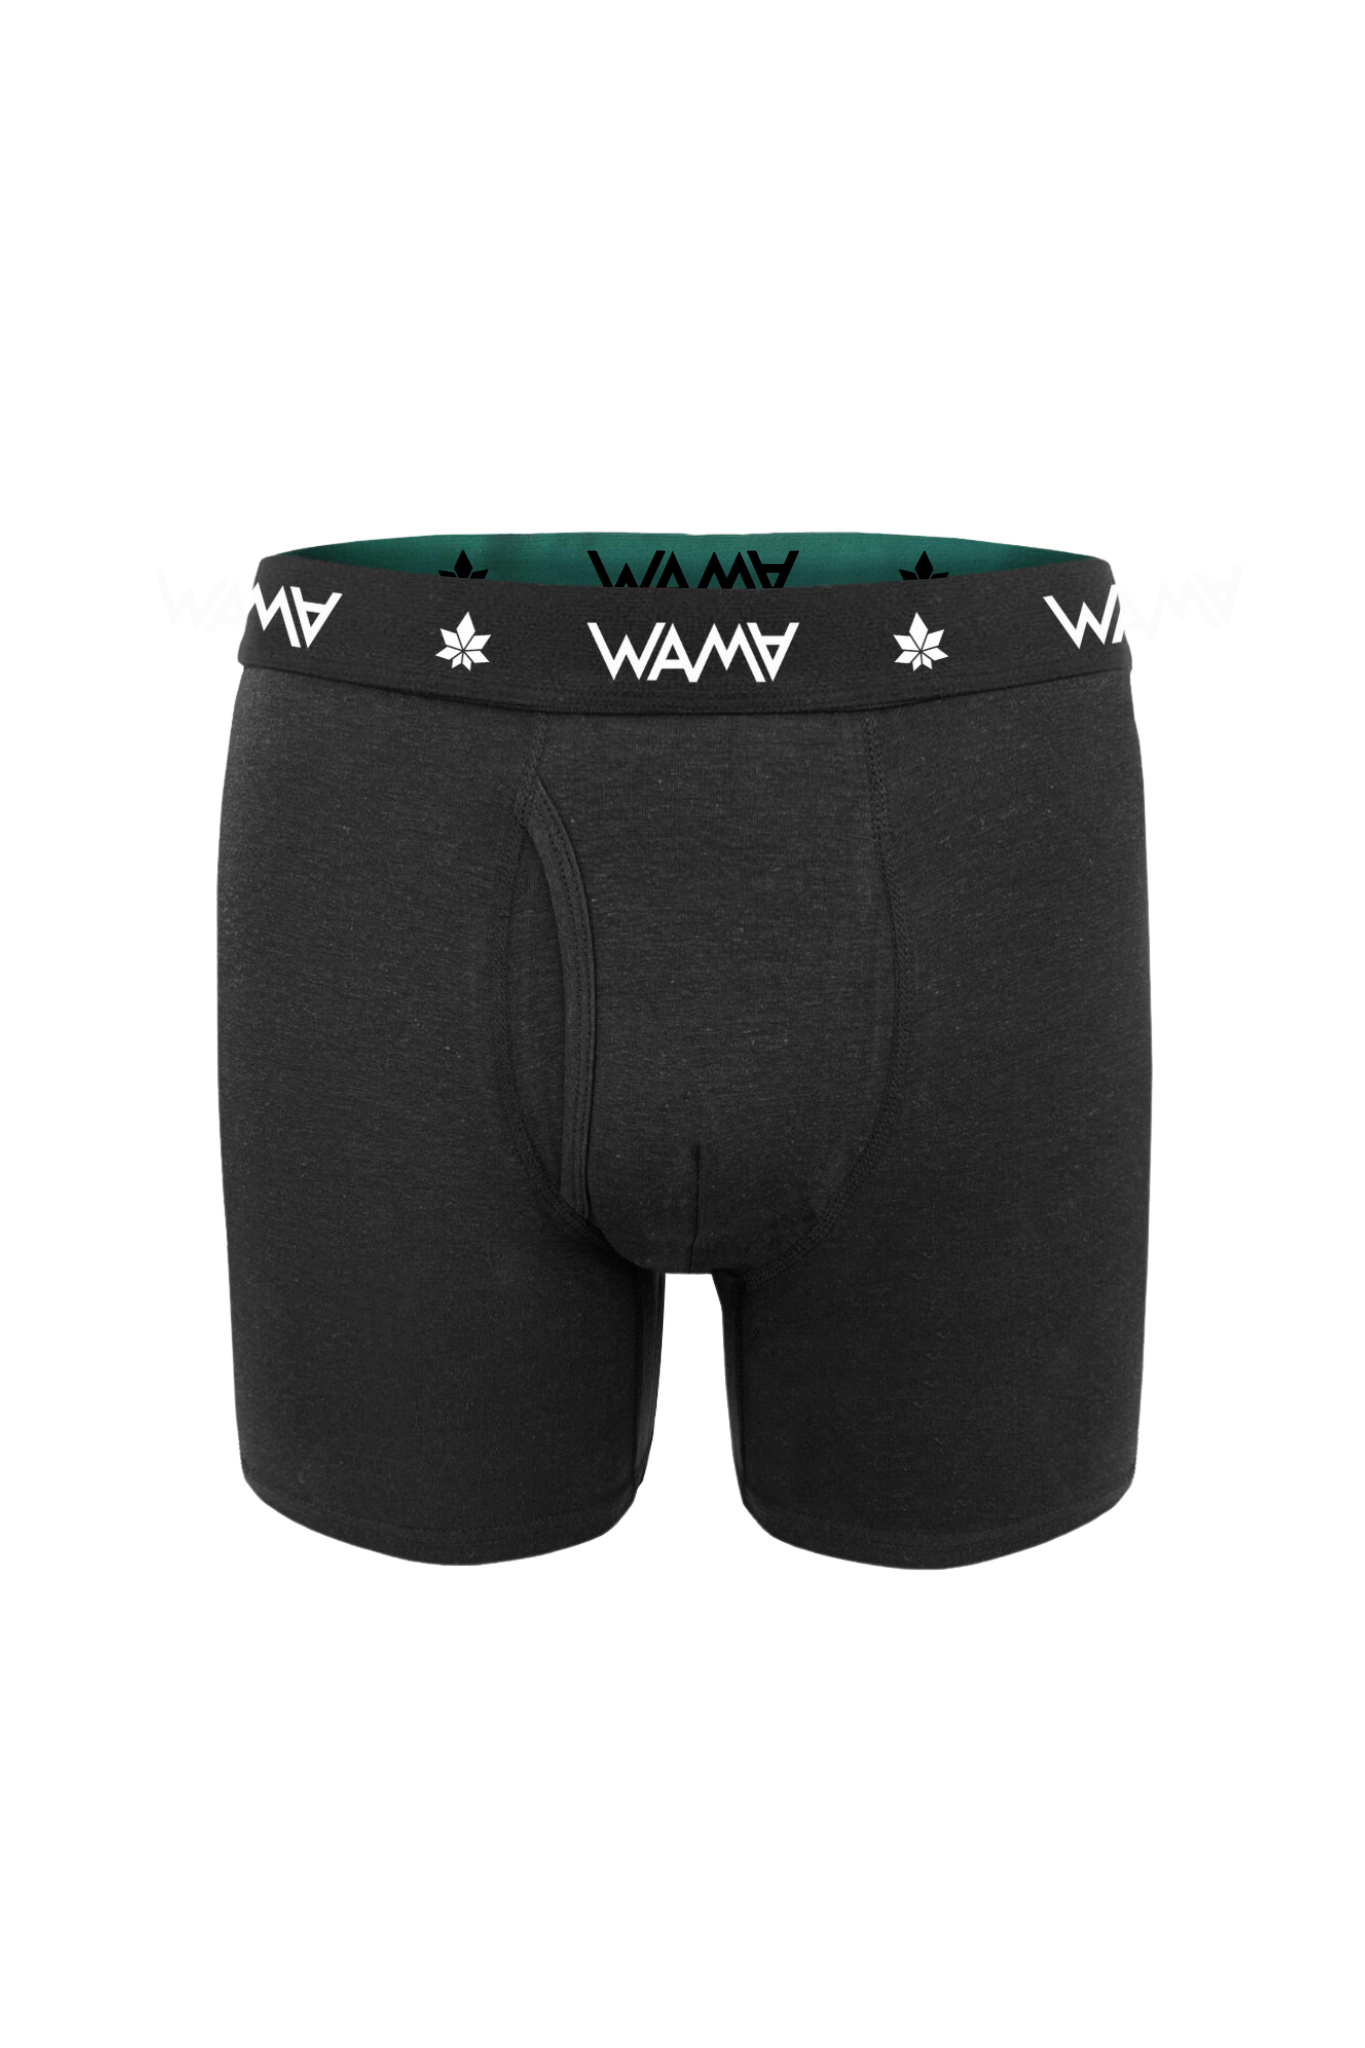 Wama Underwear wholesale products